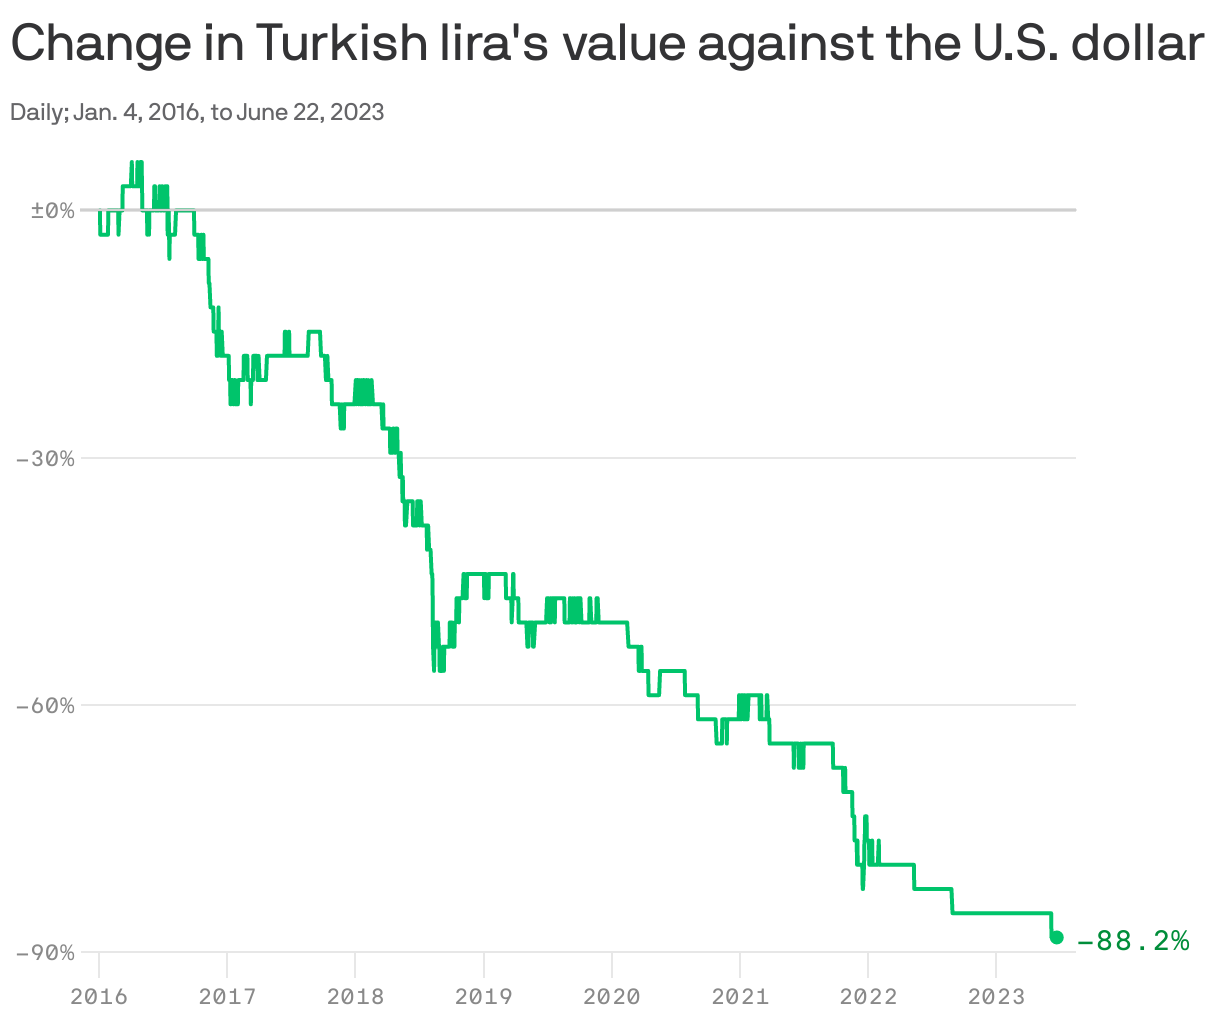 Change in Turkish lira's value against the U.S. dollar